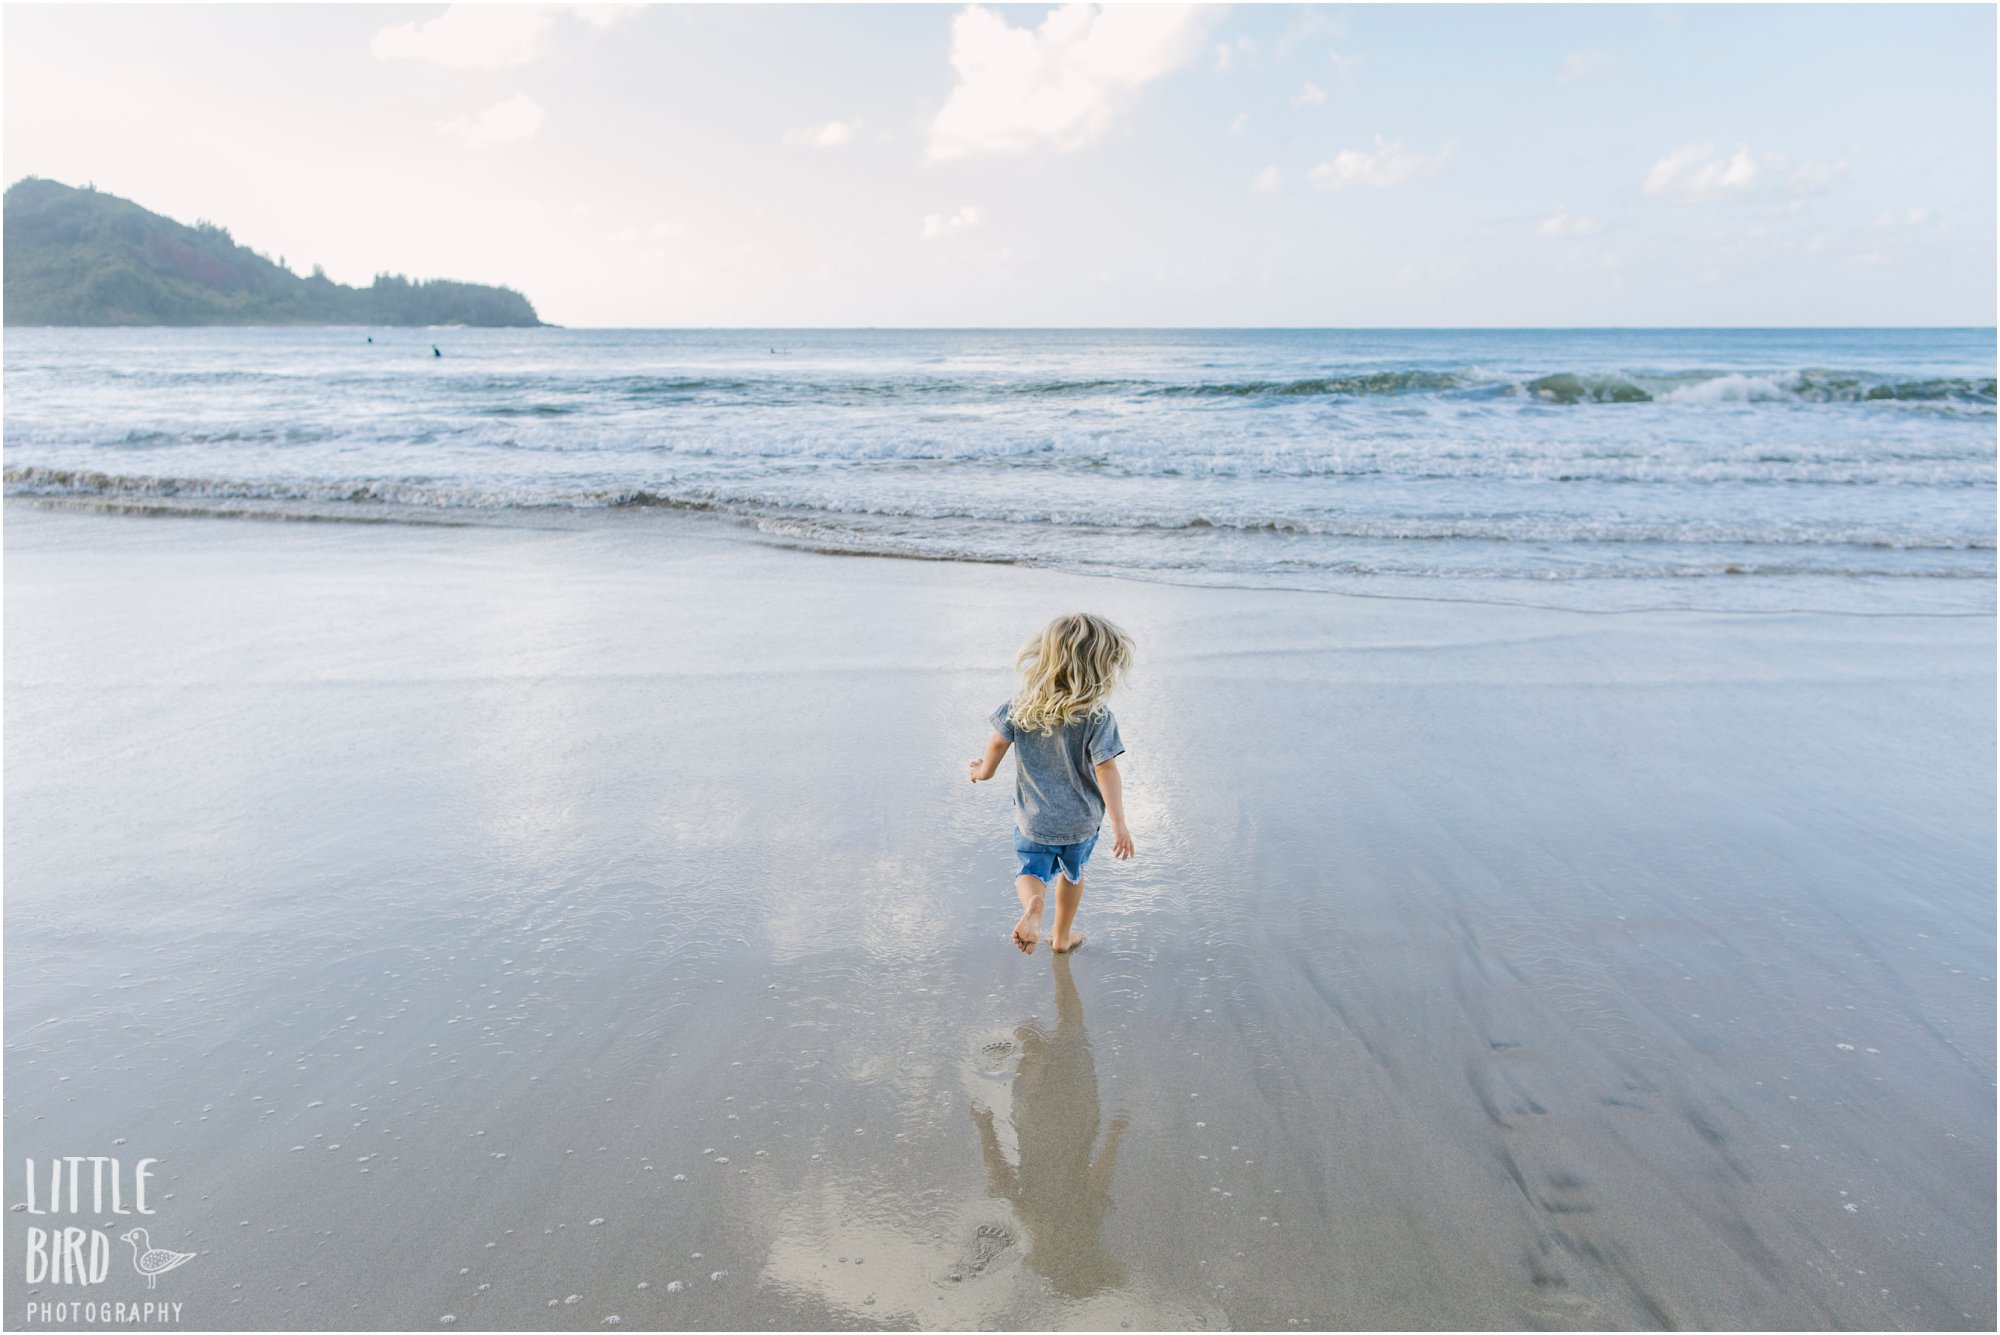 Boy running towards the ocean at Hanalei Bay photo by Little Bird Photography